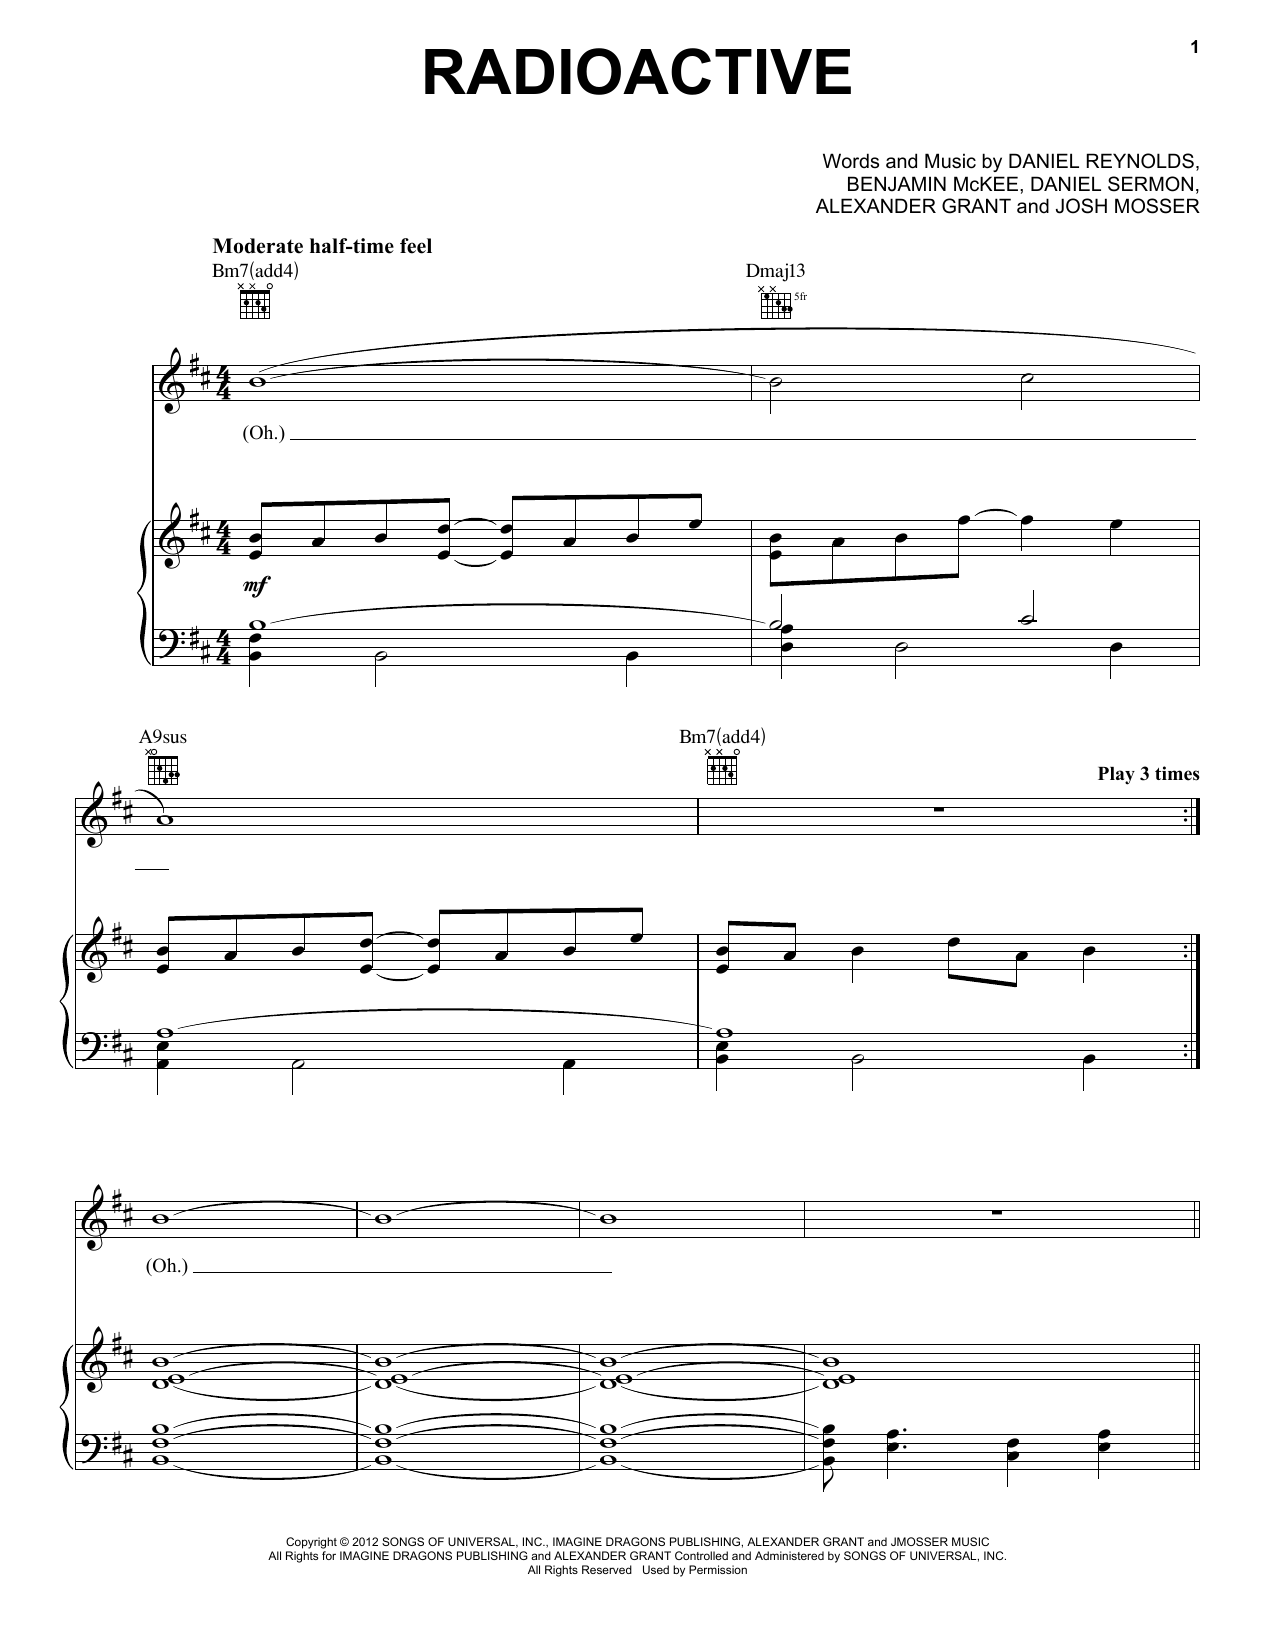 Imagine Dragons Radioactive Sheet Music Notes & Chords for Guitar Ensemble - Download or Print PDF